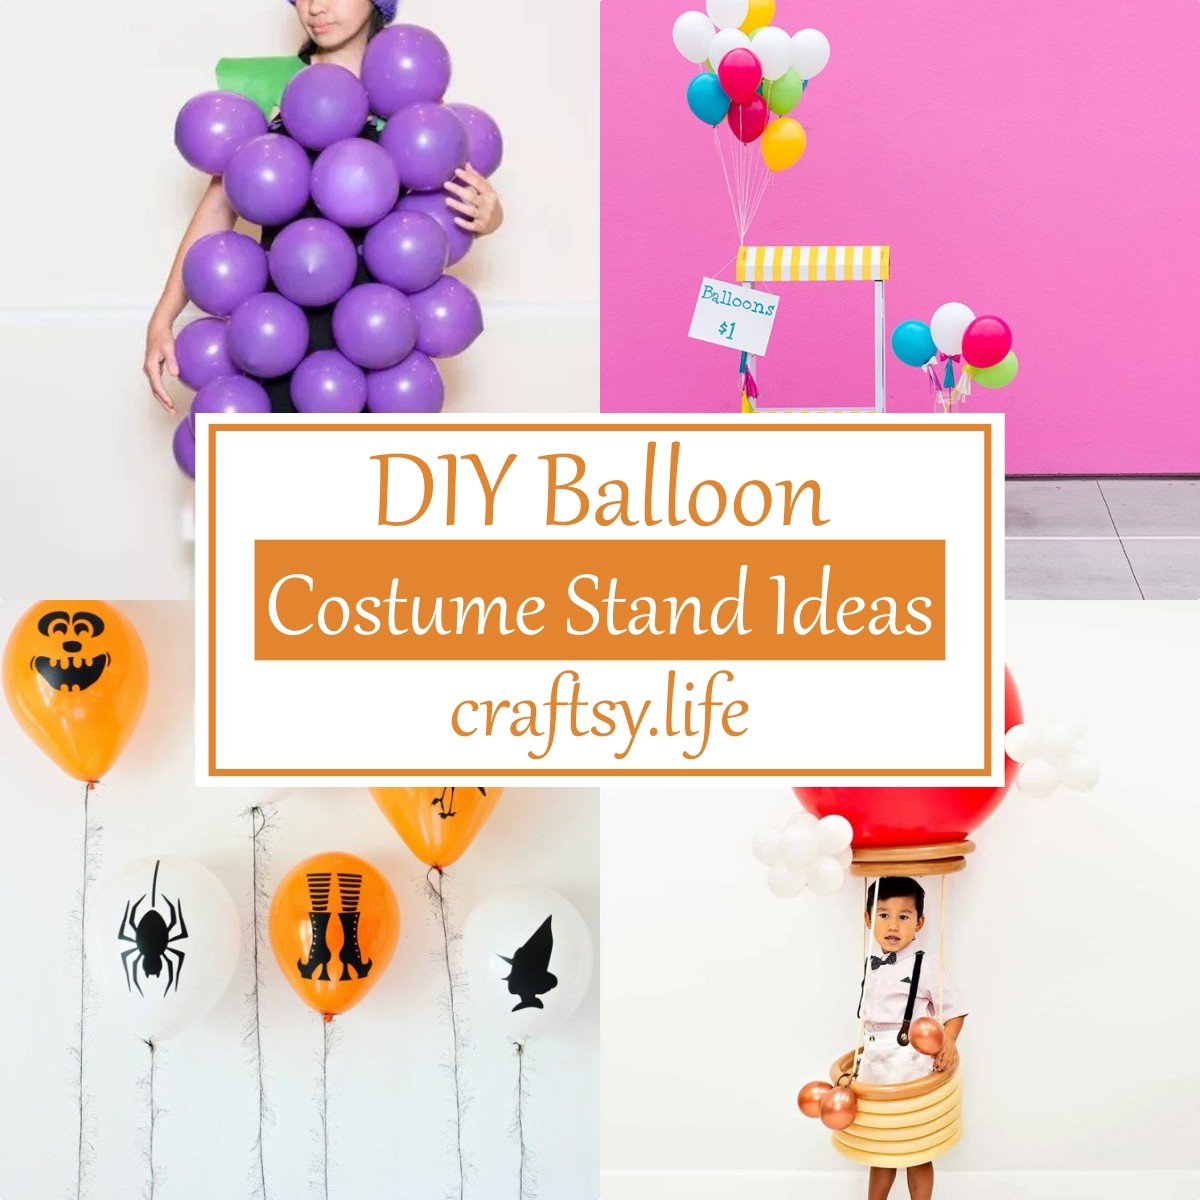 DIY Balloon Costume Stand Ideas